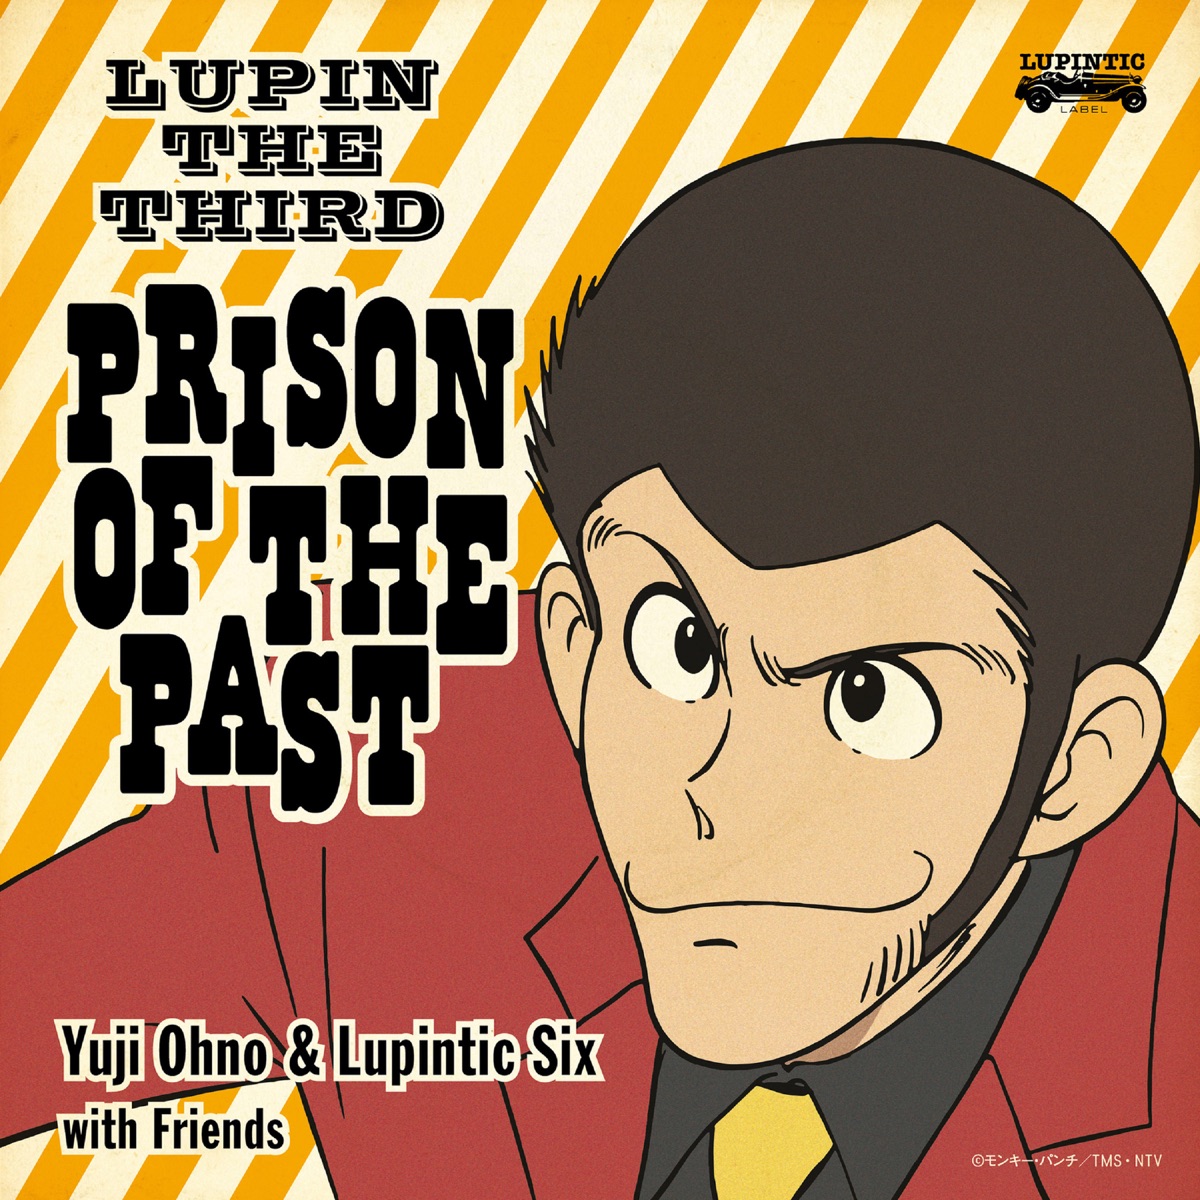 LUPIN THE THIRD - PRISON OF THE PAST - Yuji Ohno u0026 Lupintic Sixのアルバム -  Apple Music